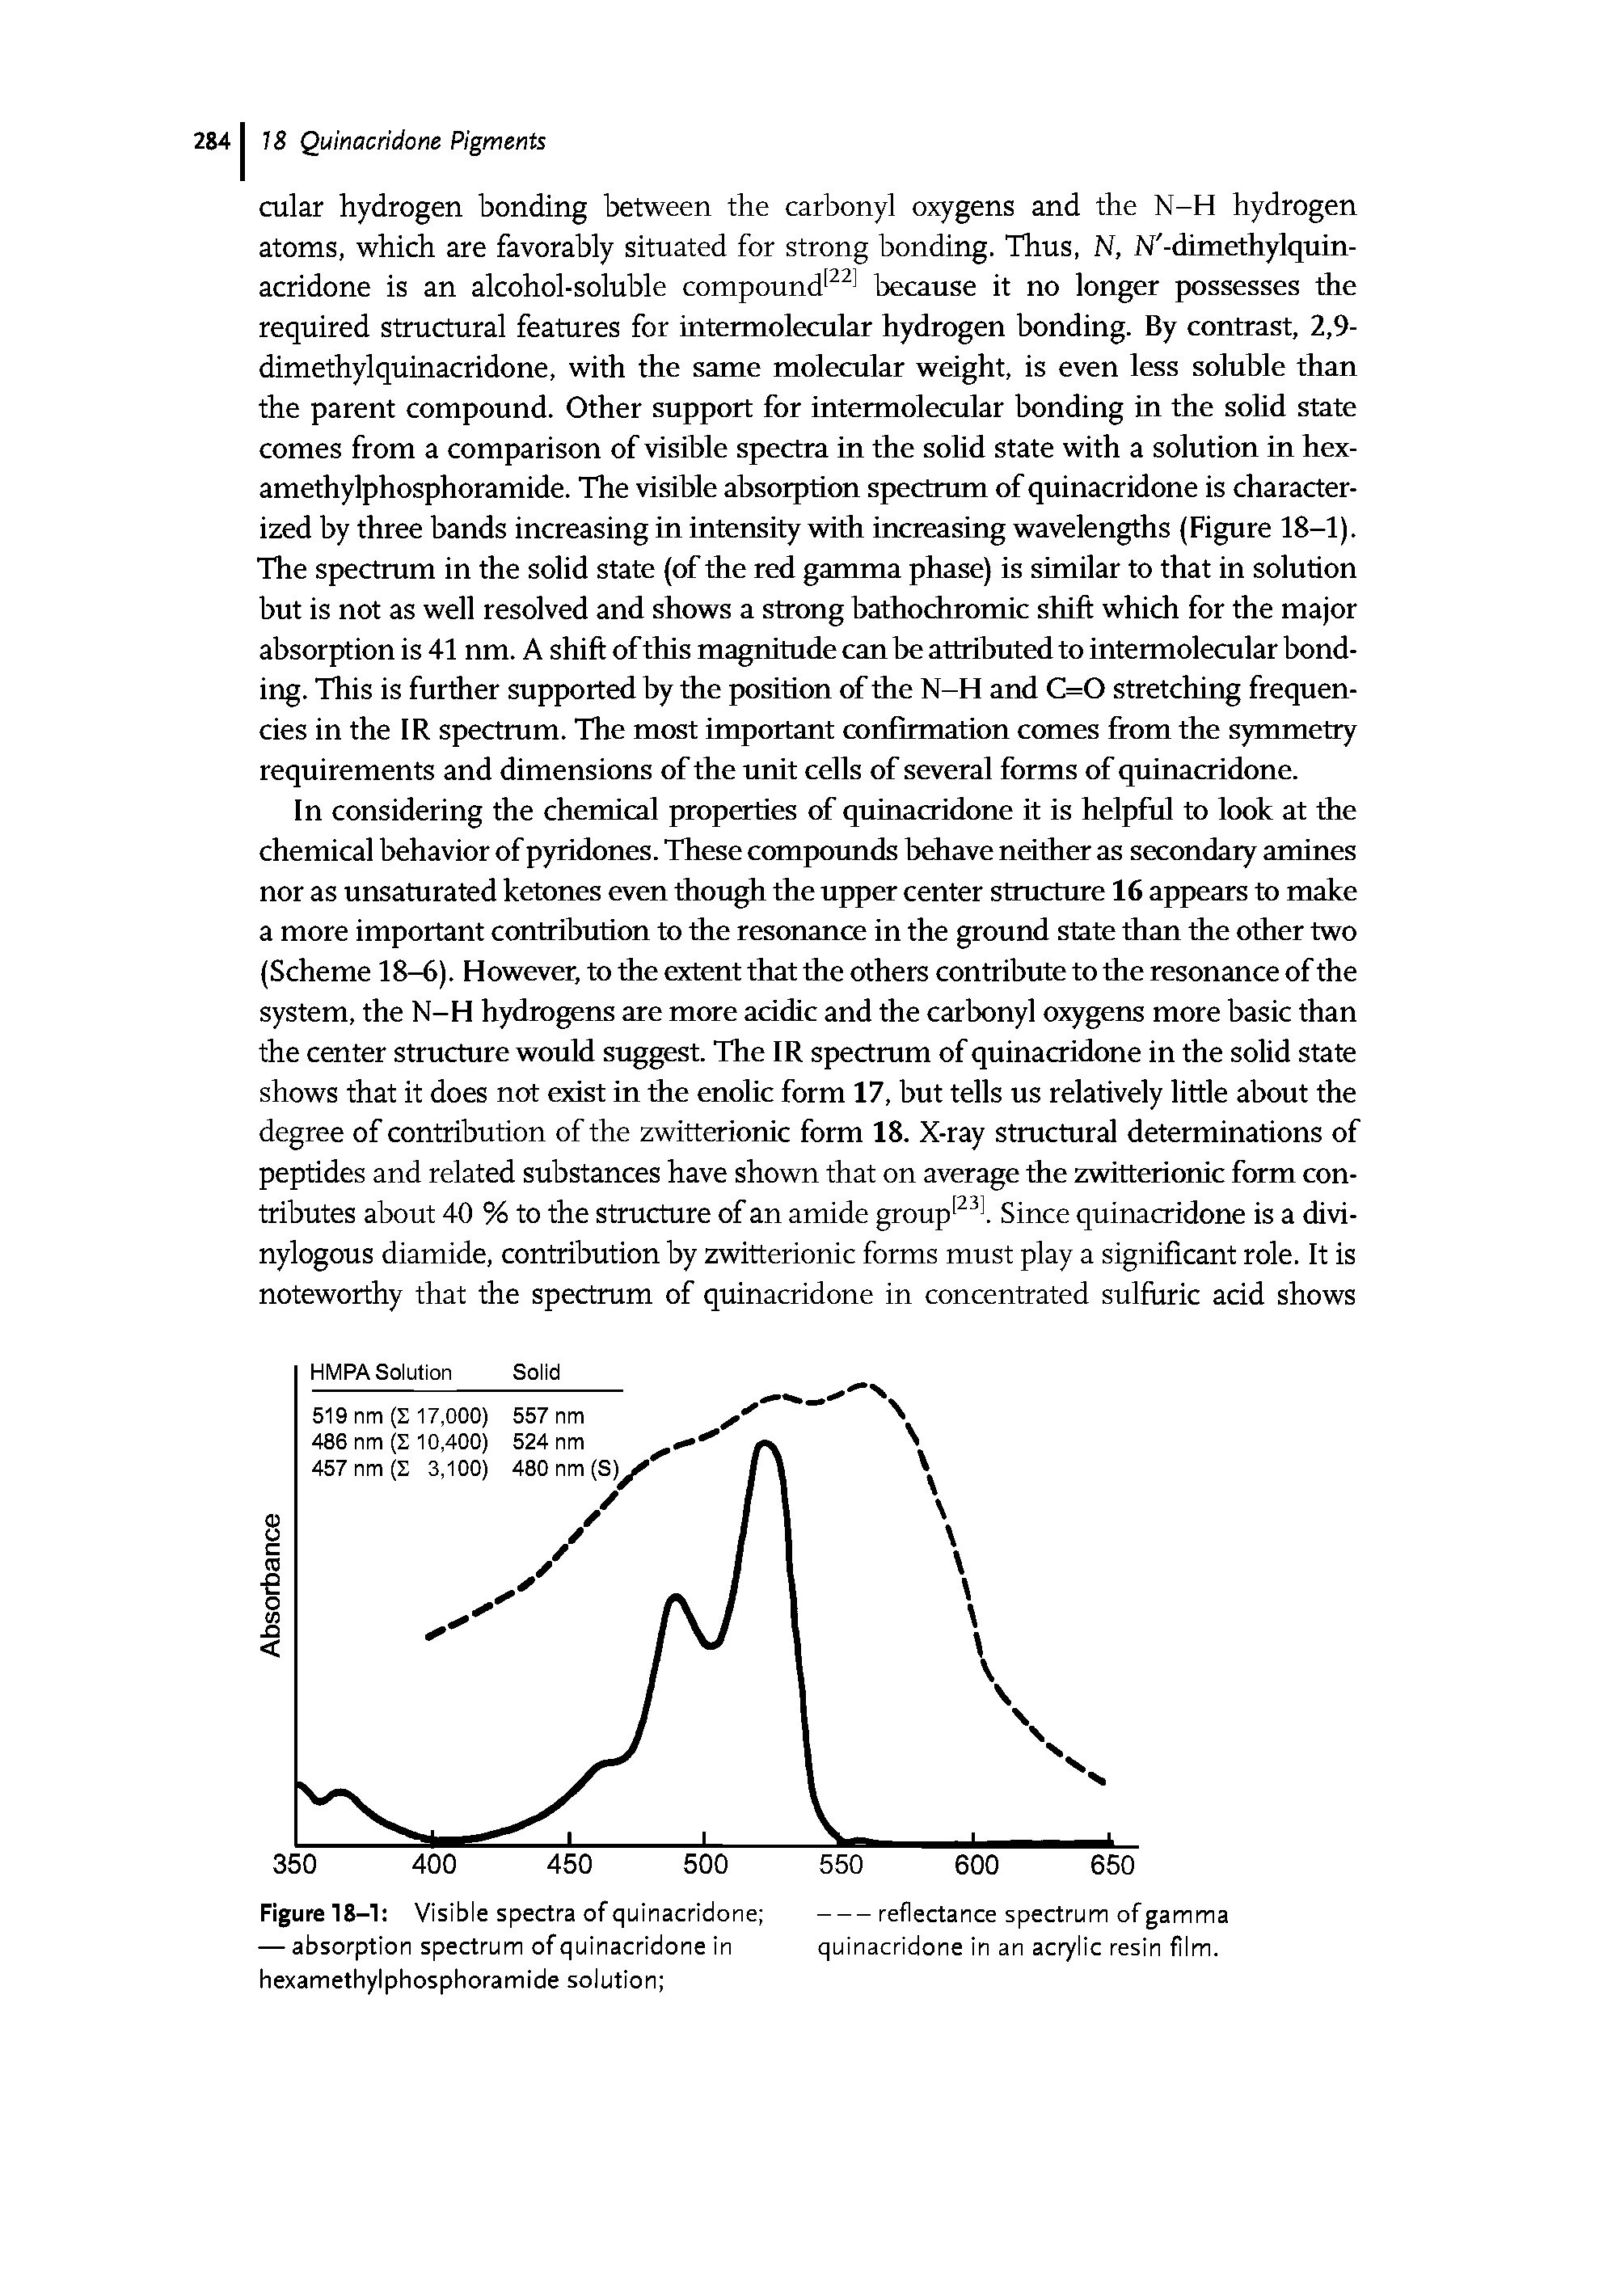 Figure 18-1 Visible spectra of quinacridone — absorption spectrum of quinacridone in hexamethylphosphoramide solution ...